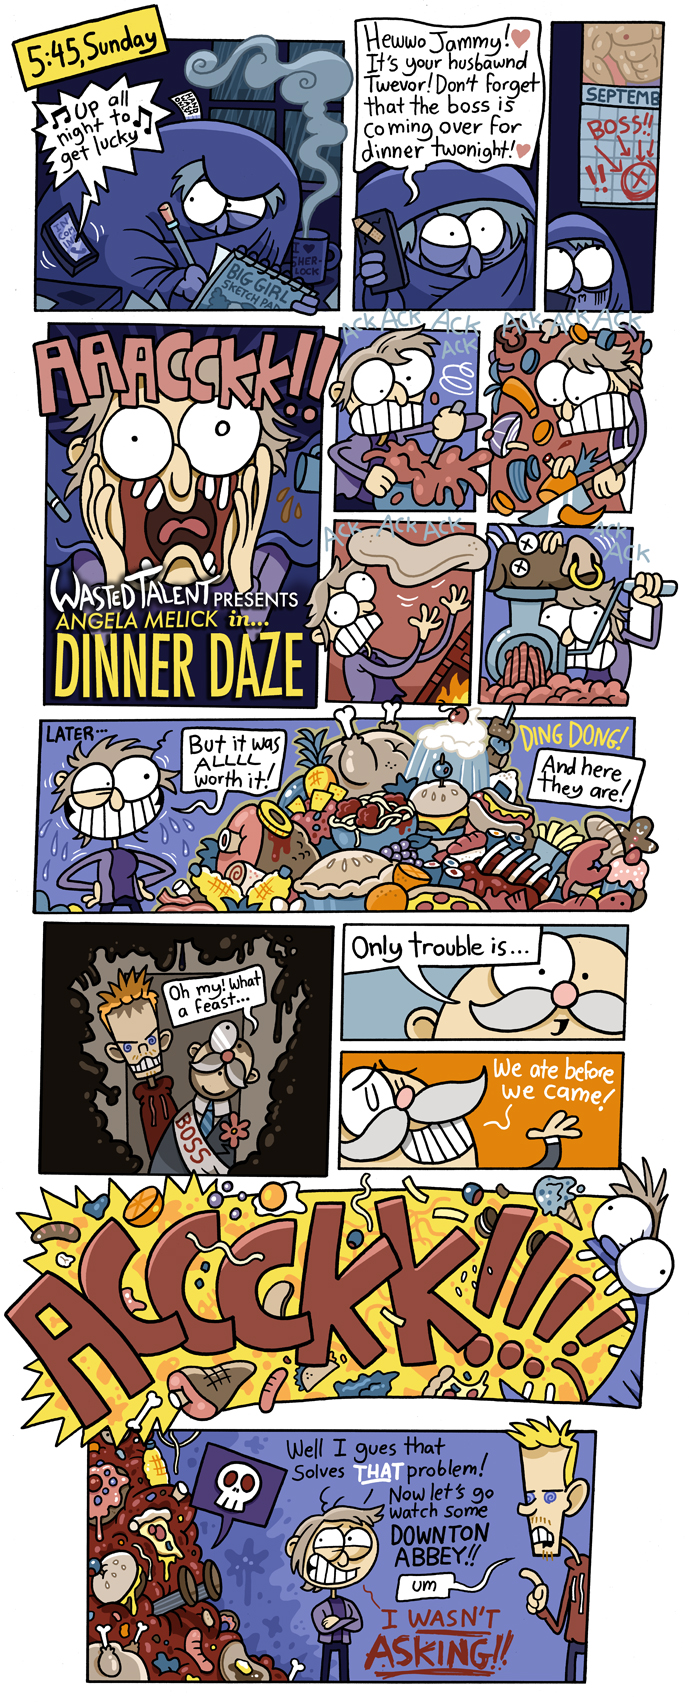 Dinner Daze - Guest Comic by JJ McCullough